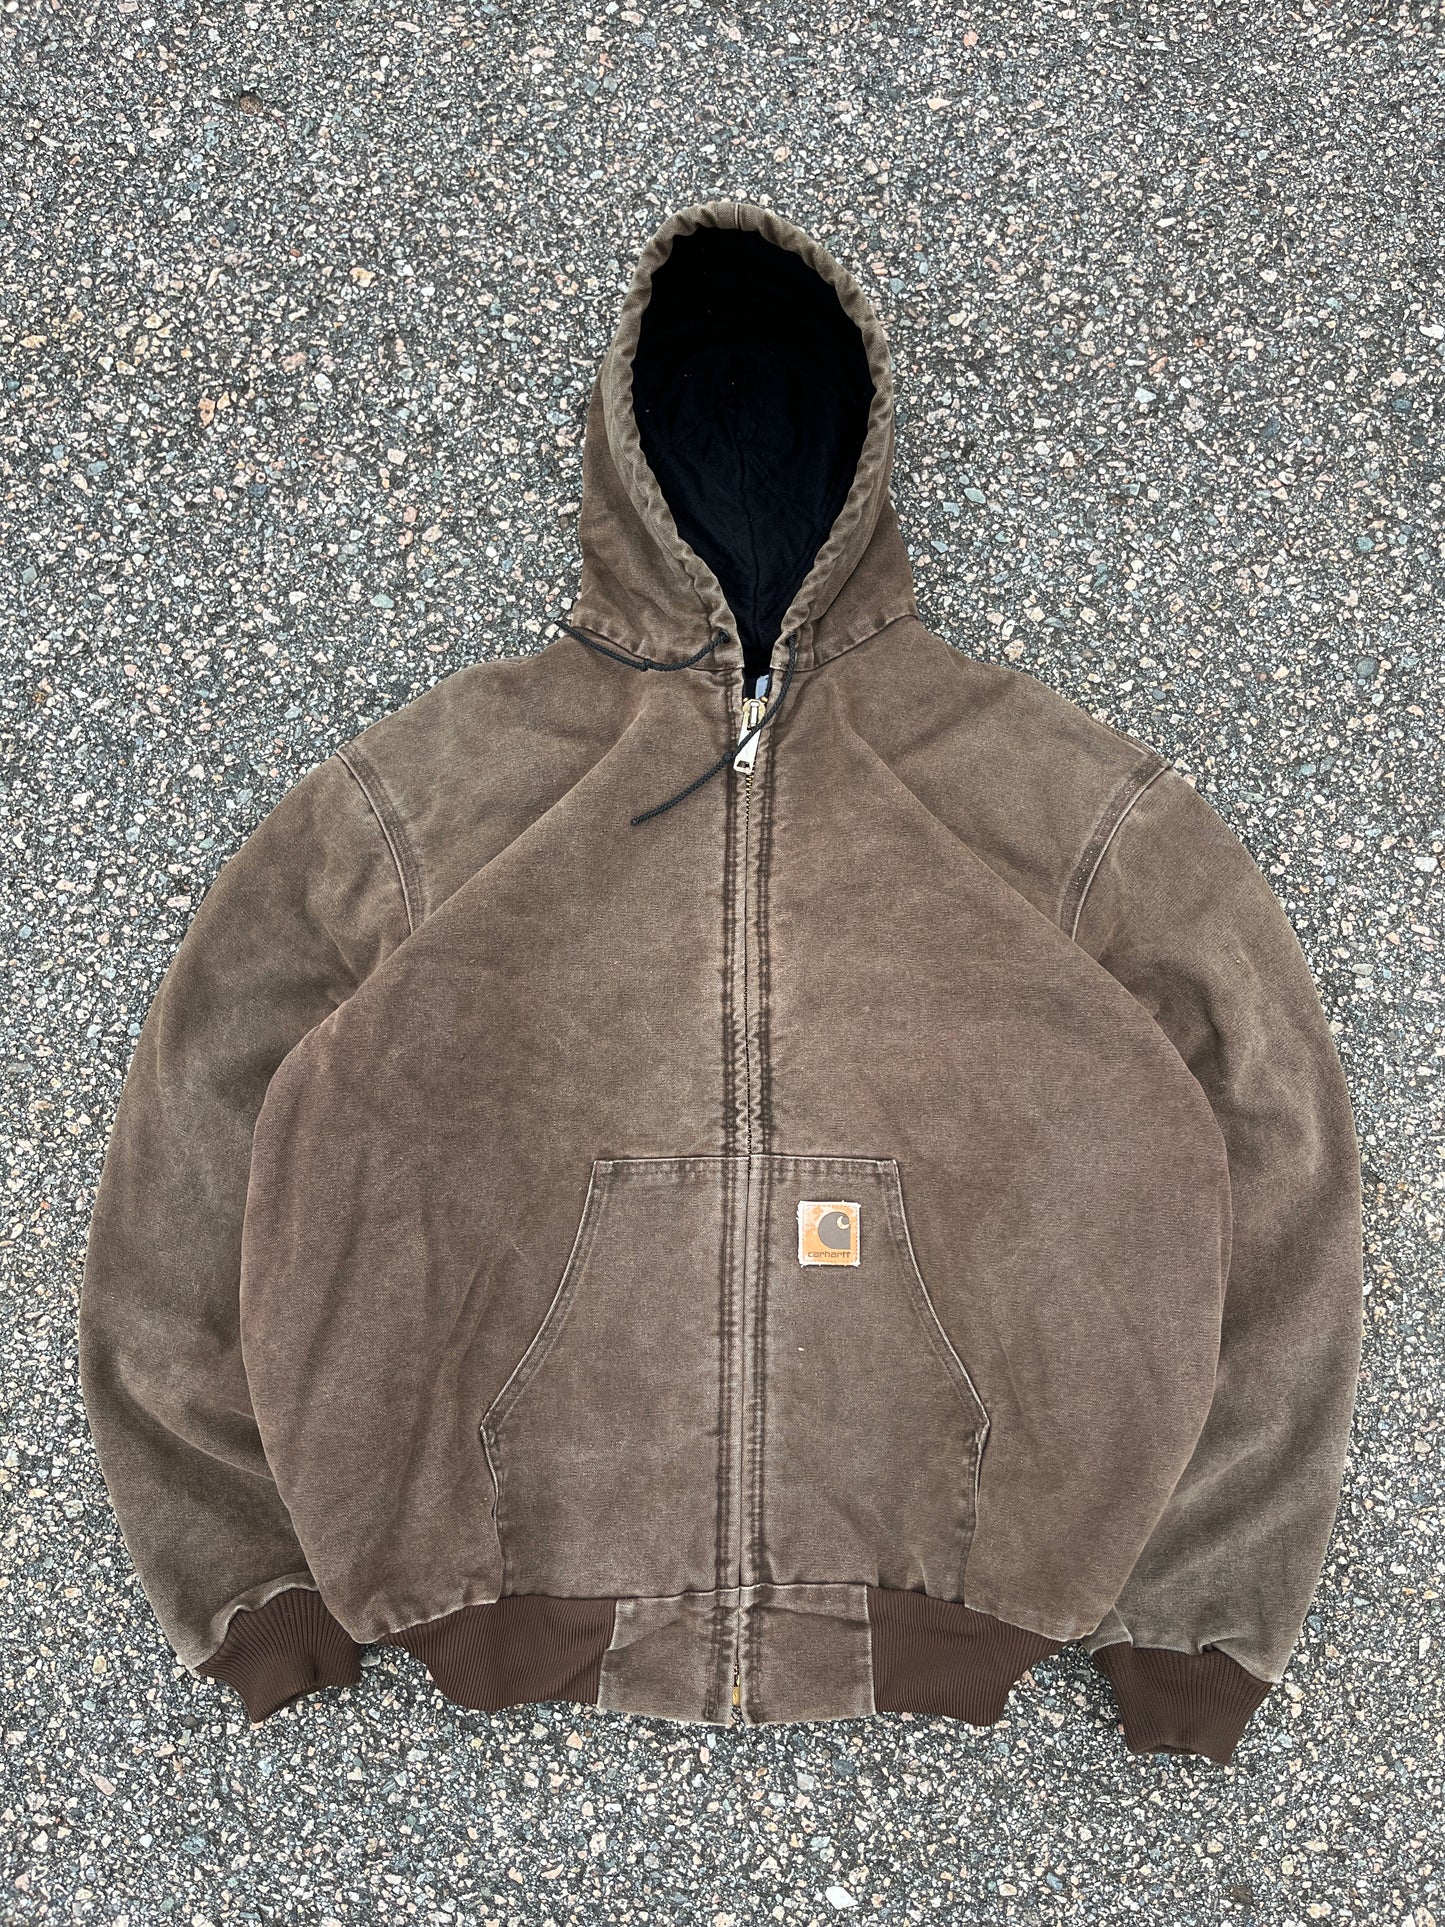 Faded Chestnut Brown Carhartt Active Jacket - XL